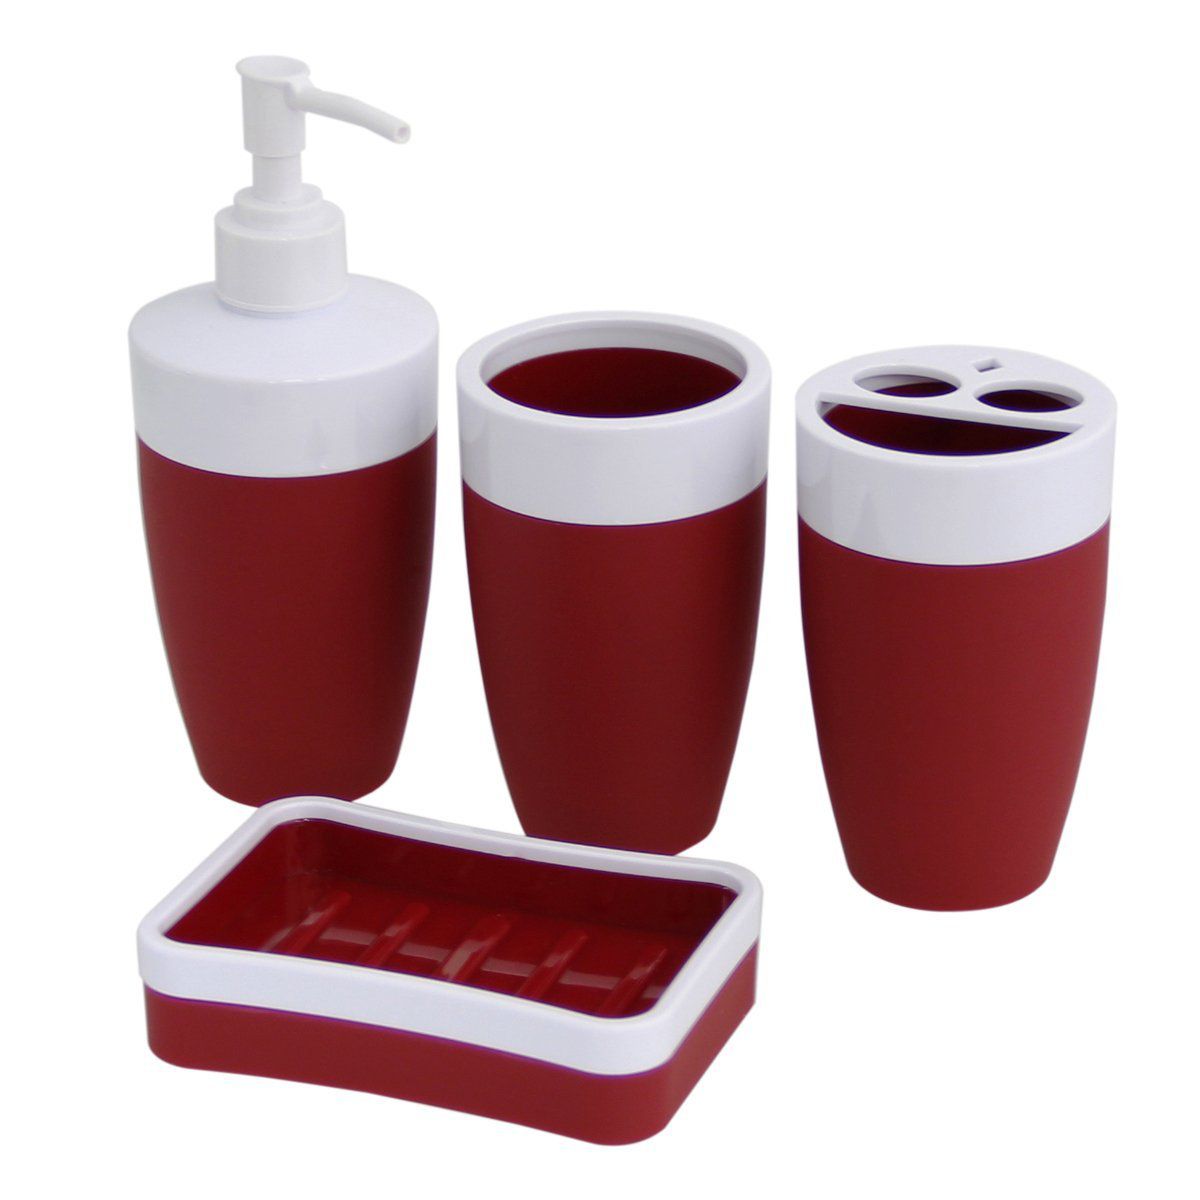 JustNile Plastic Rubber 4-Piece Bathroom Accessory Set - Modern Red